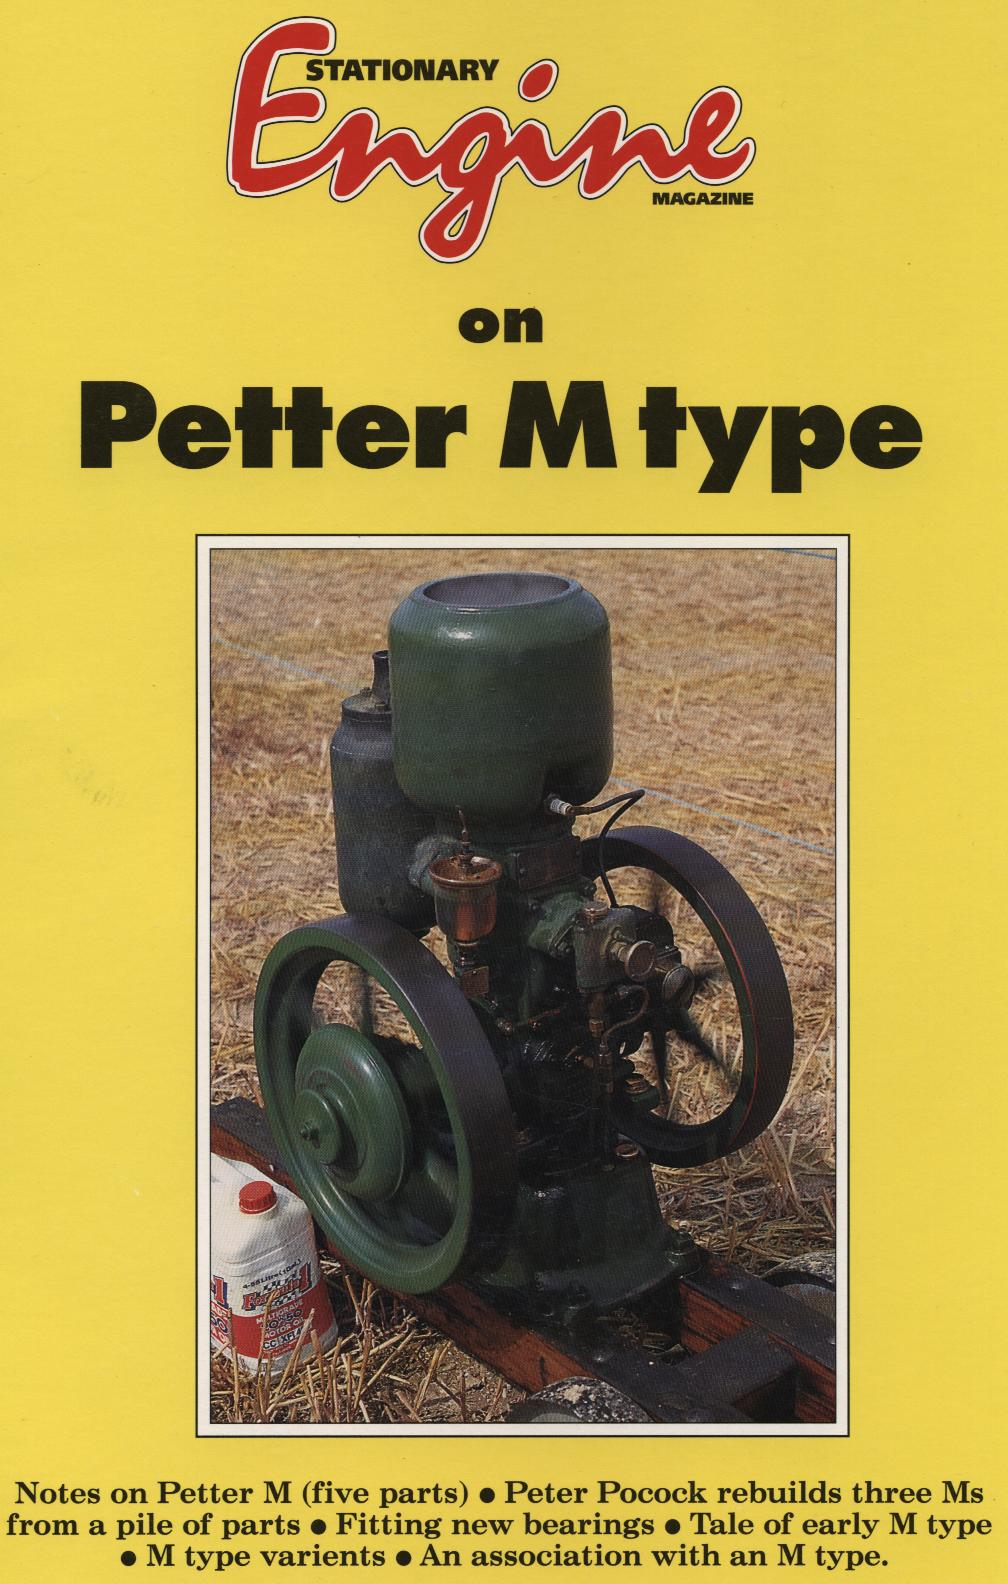 Petter M Type